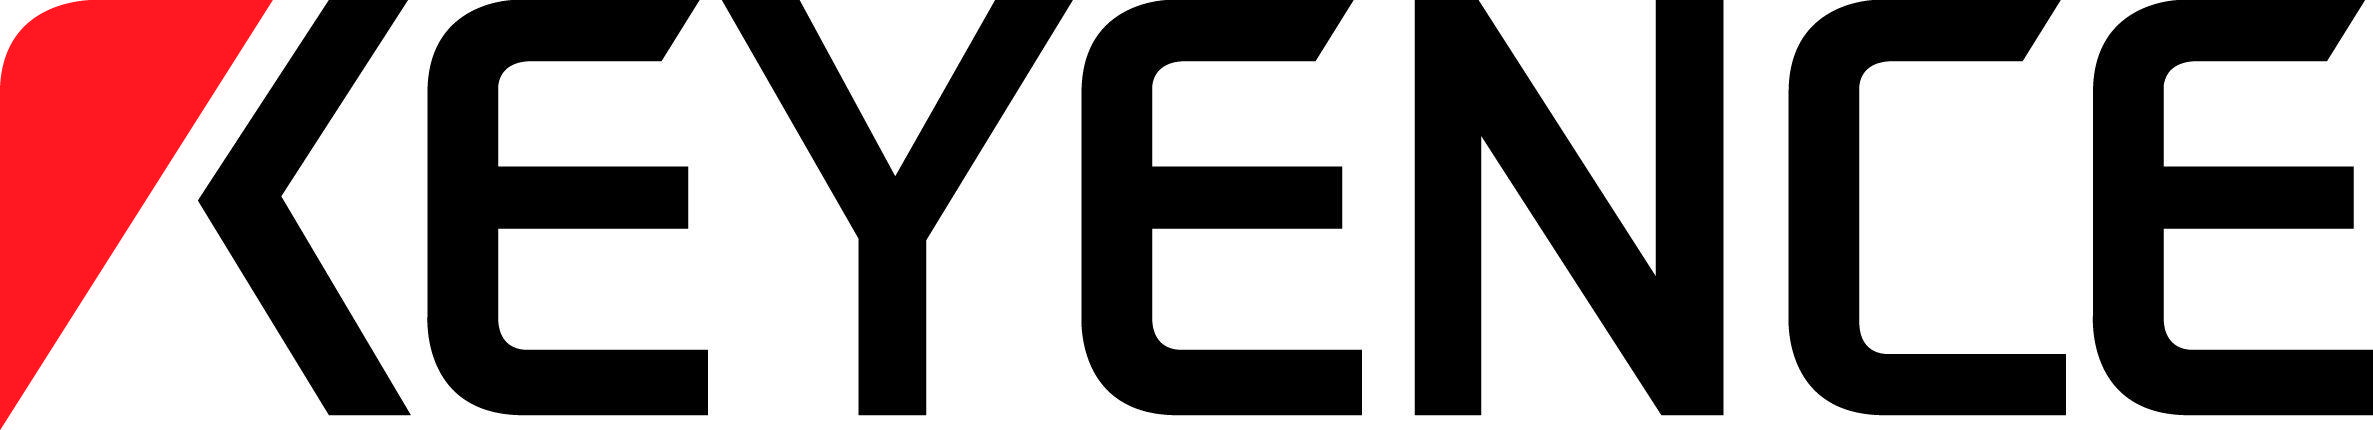 KEYENCE Logo - Keyence Logo